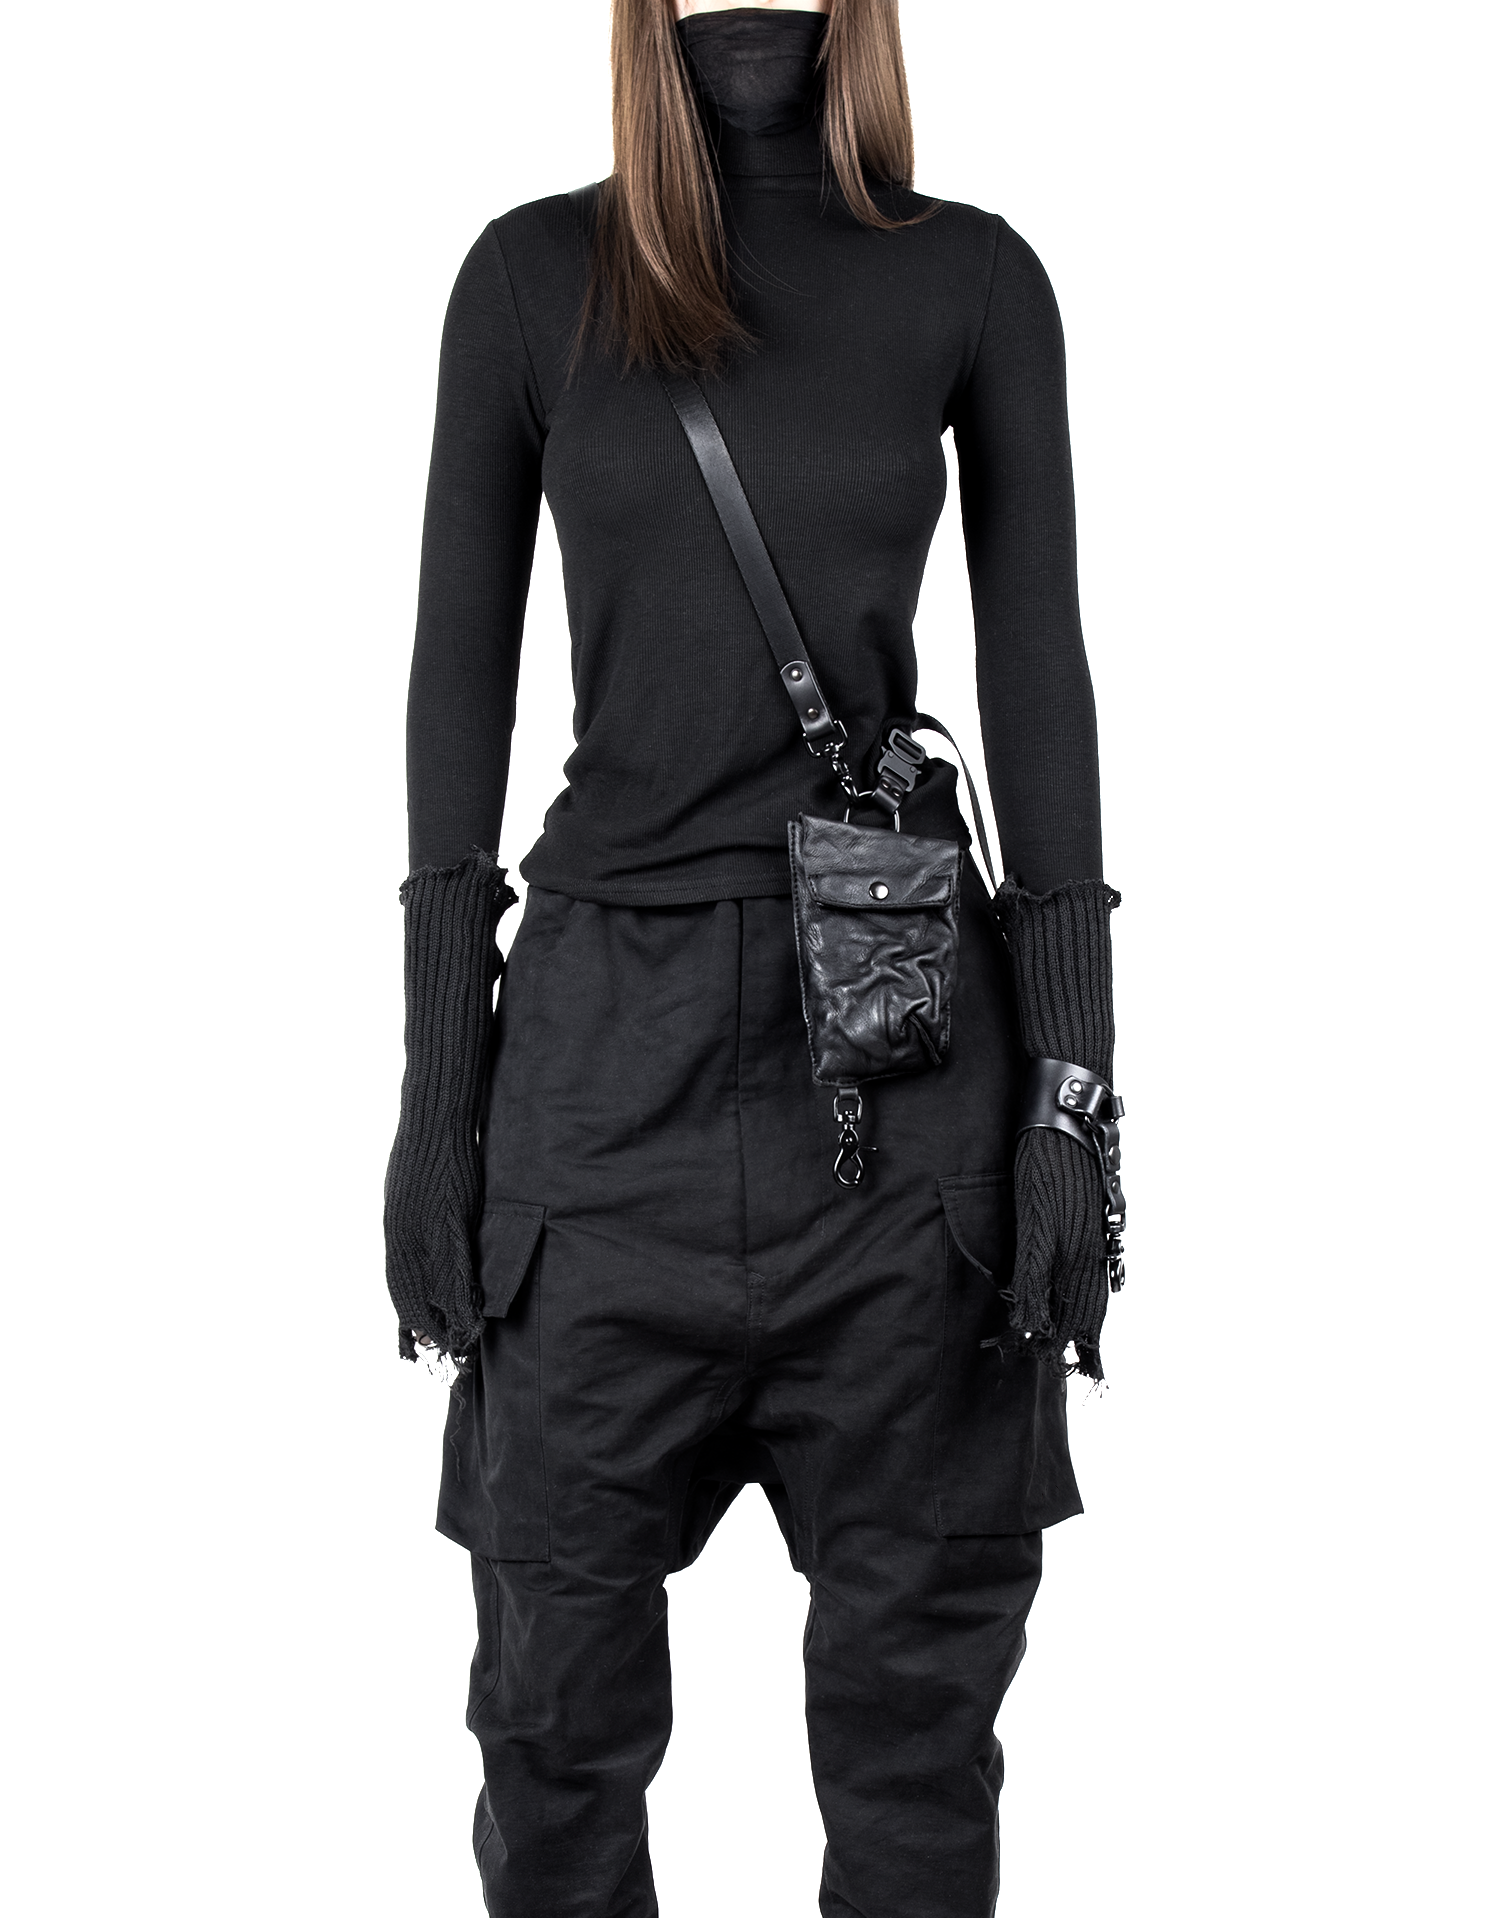 Black leather bags - Avantgarde handmade bags - Online shop — TEO+NG